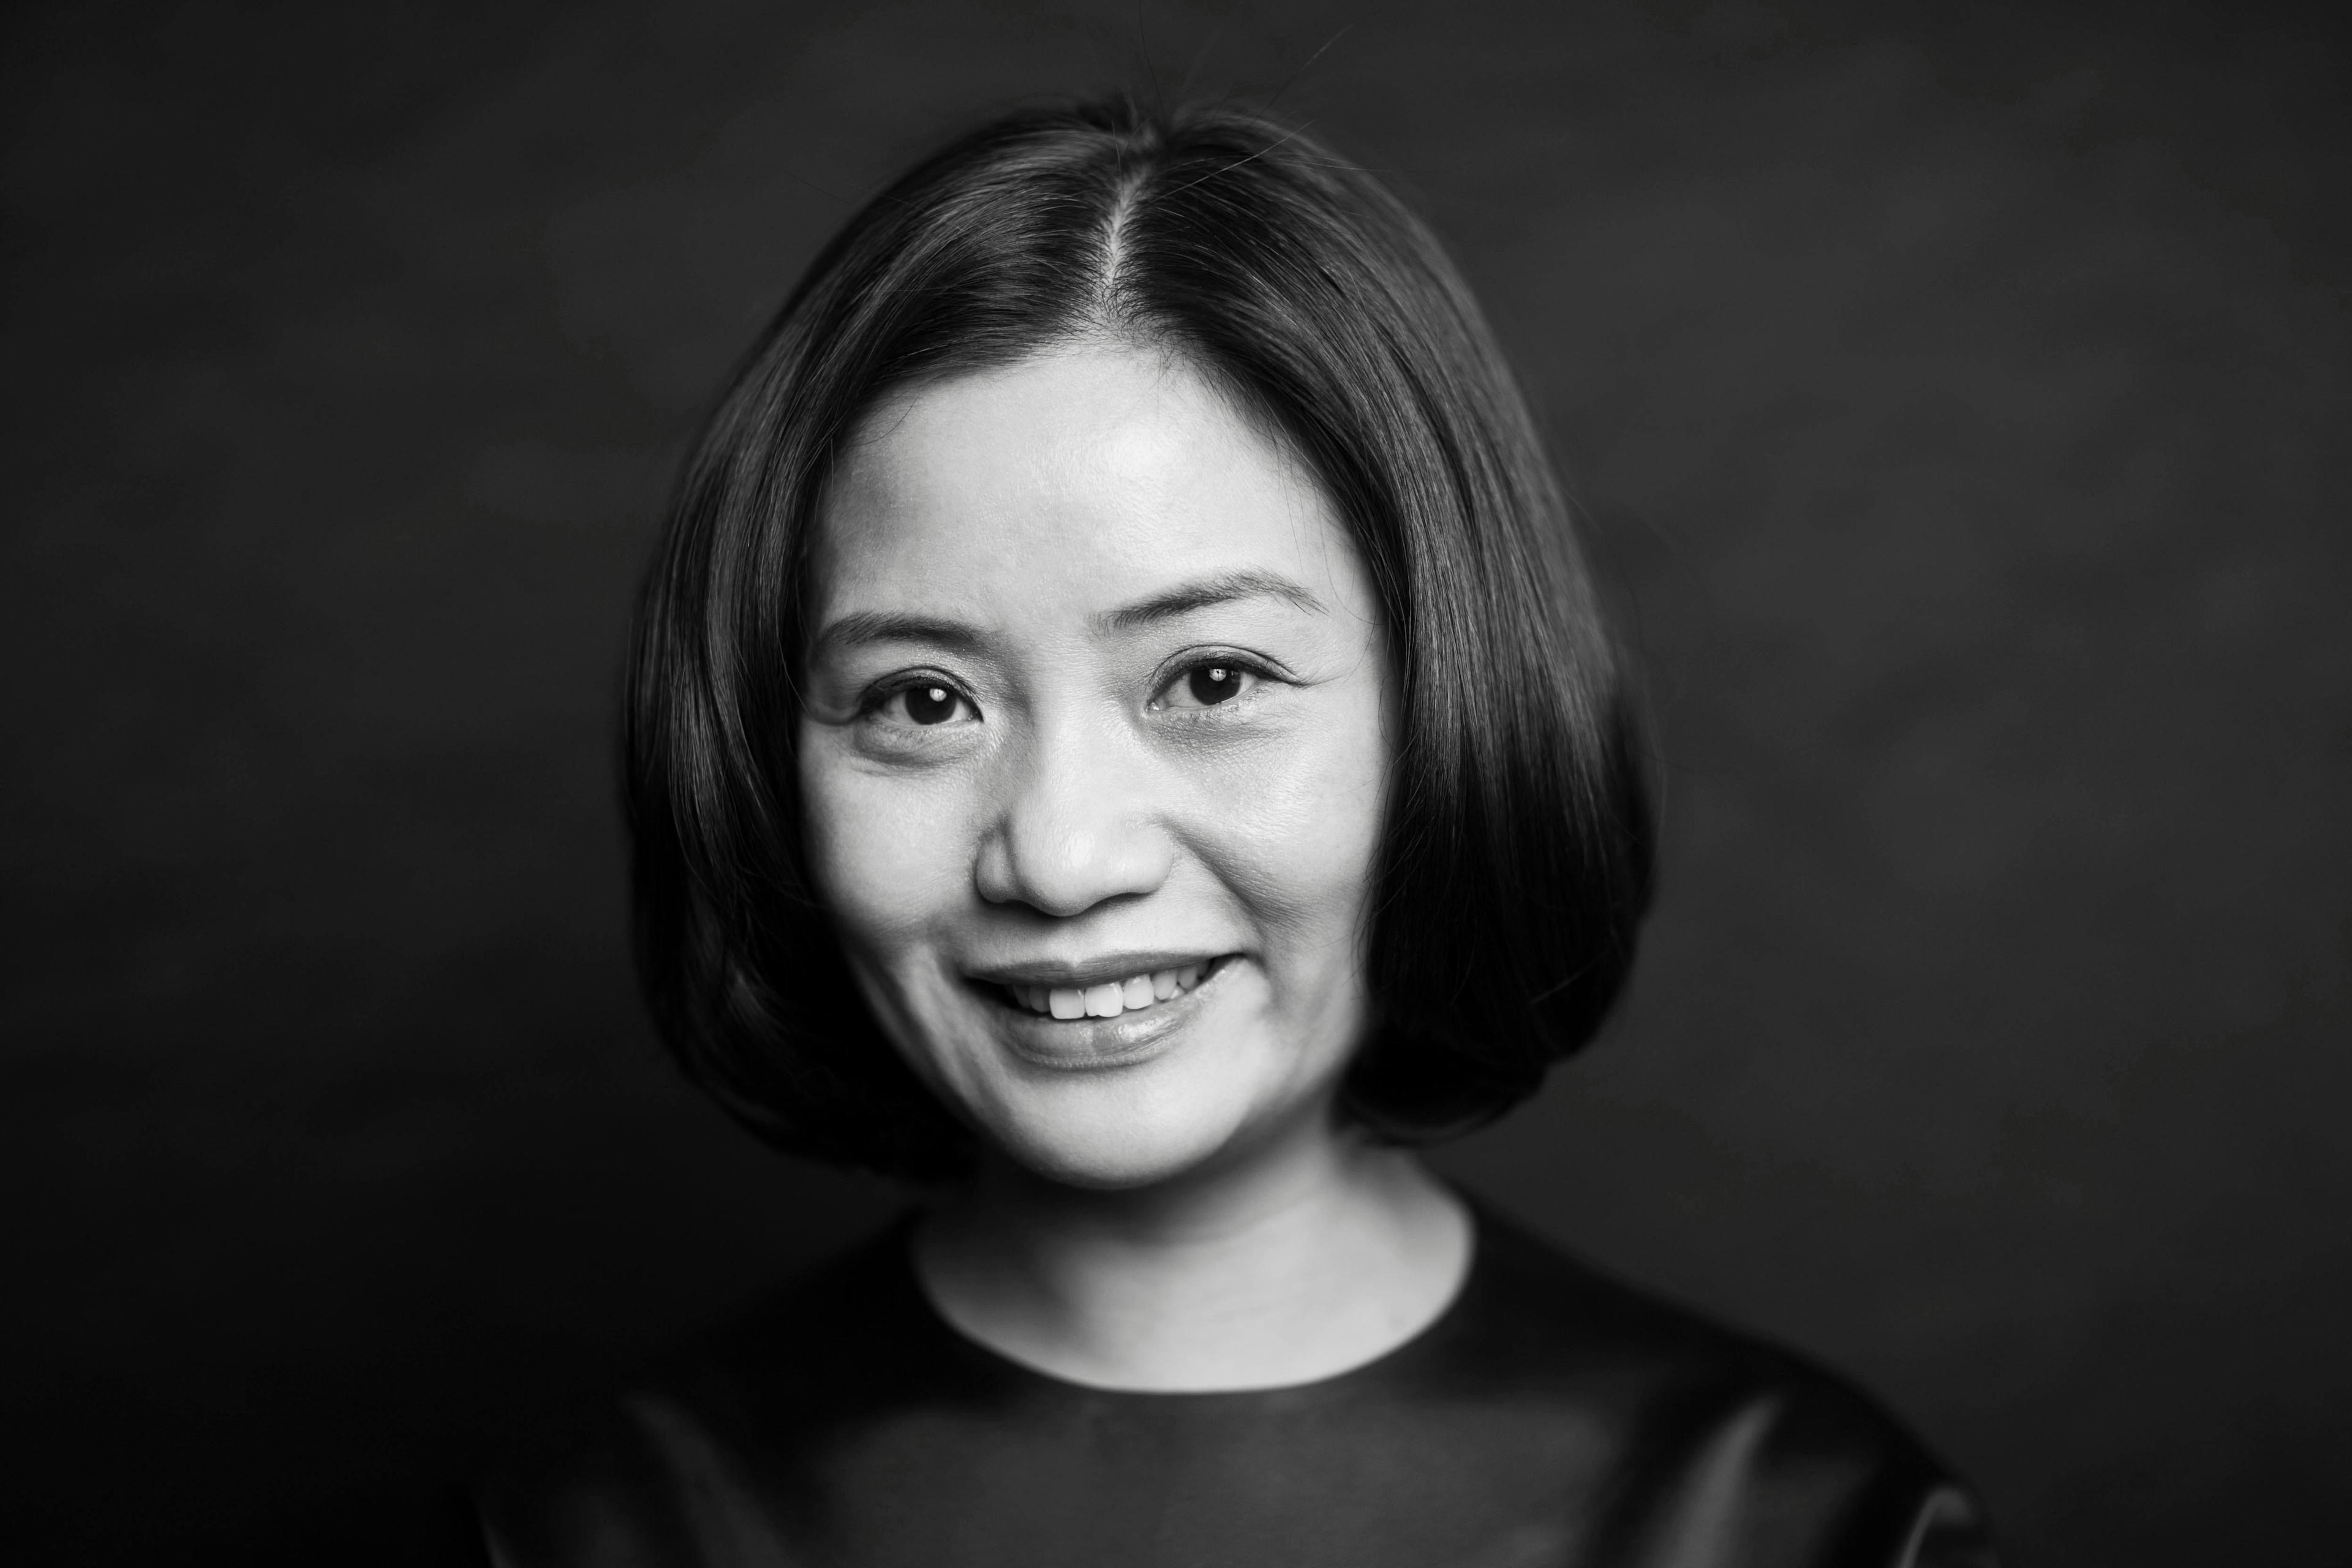 beijing face person human smile head portrait photography photo female